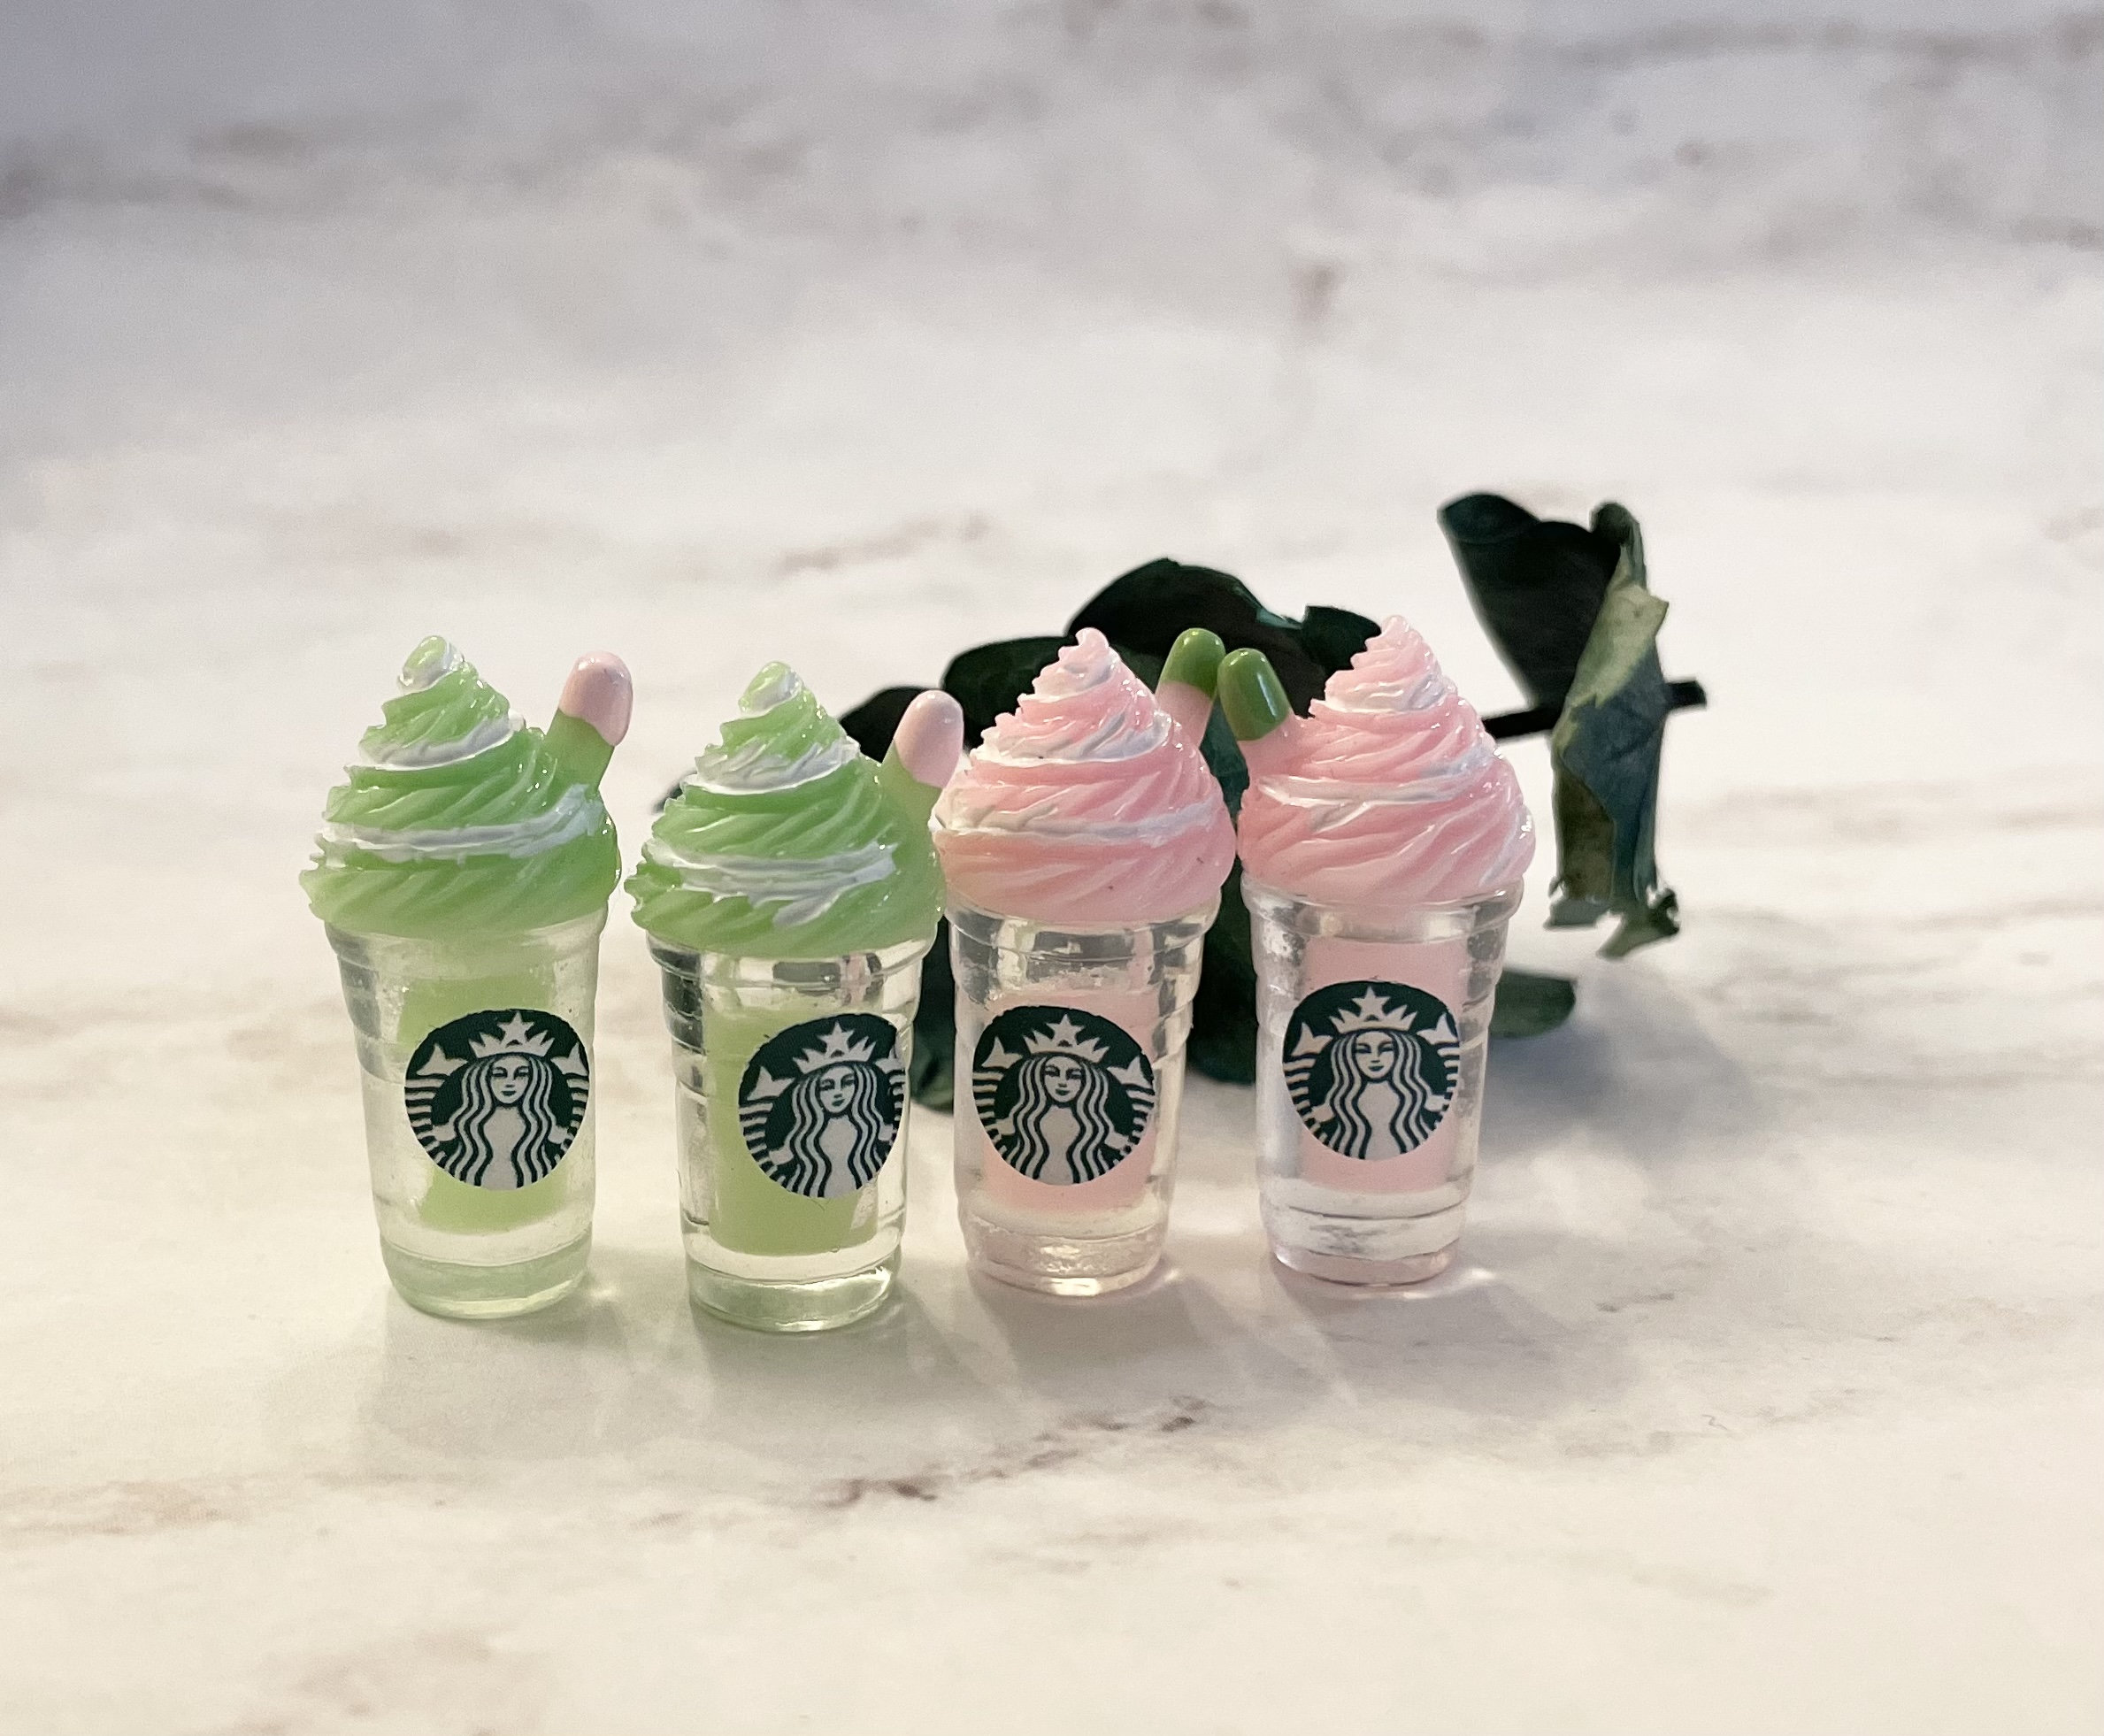 Dollhouse Miniature Starbucks Ice Coffee Frappuccino (2 pieces